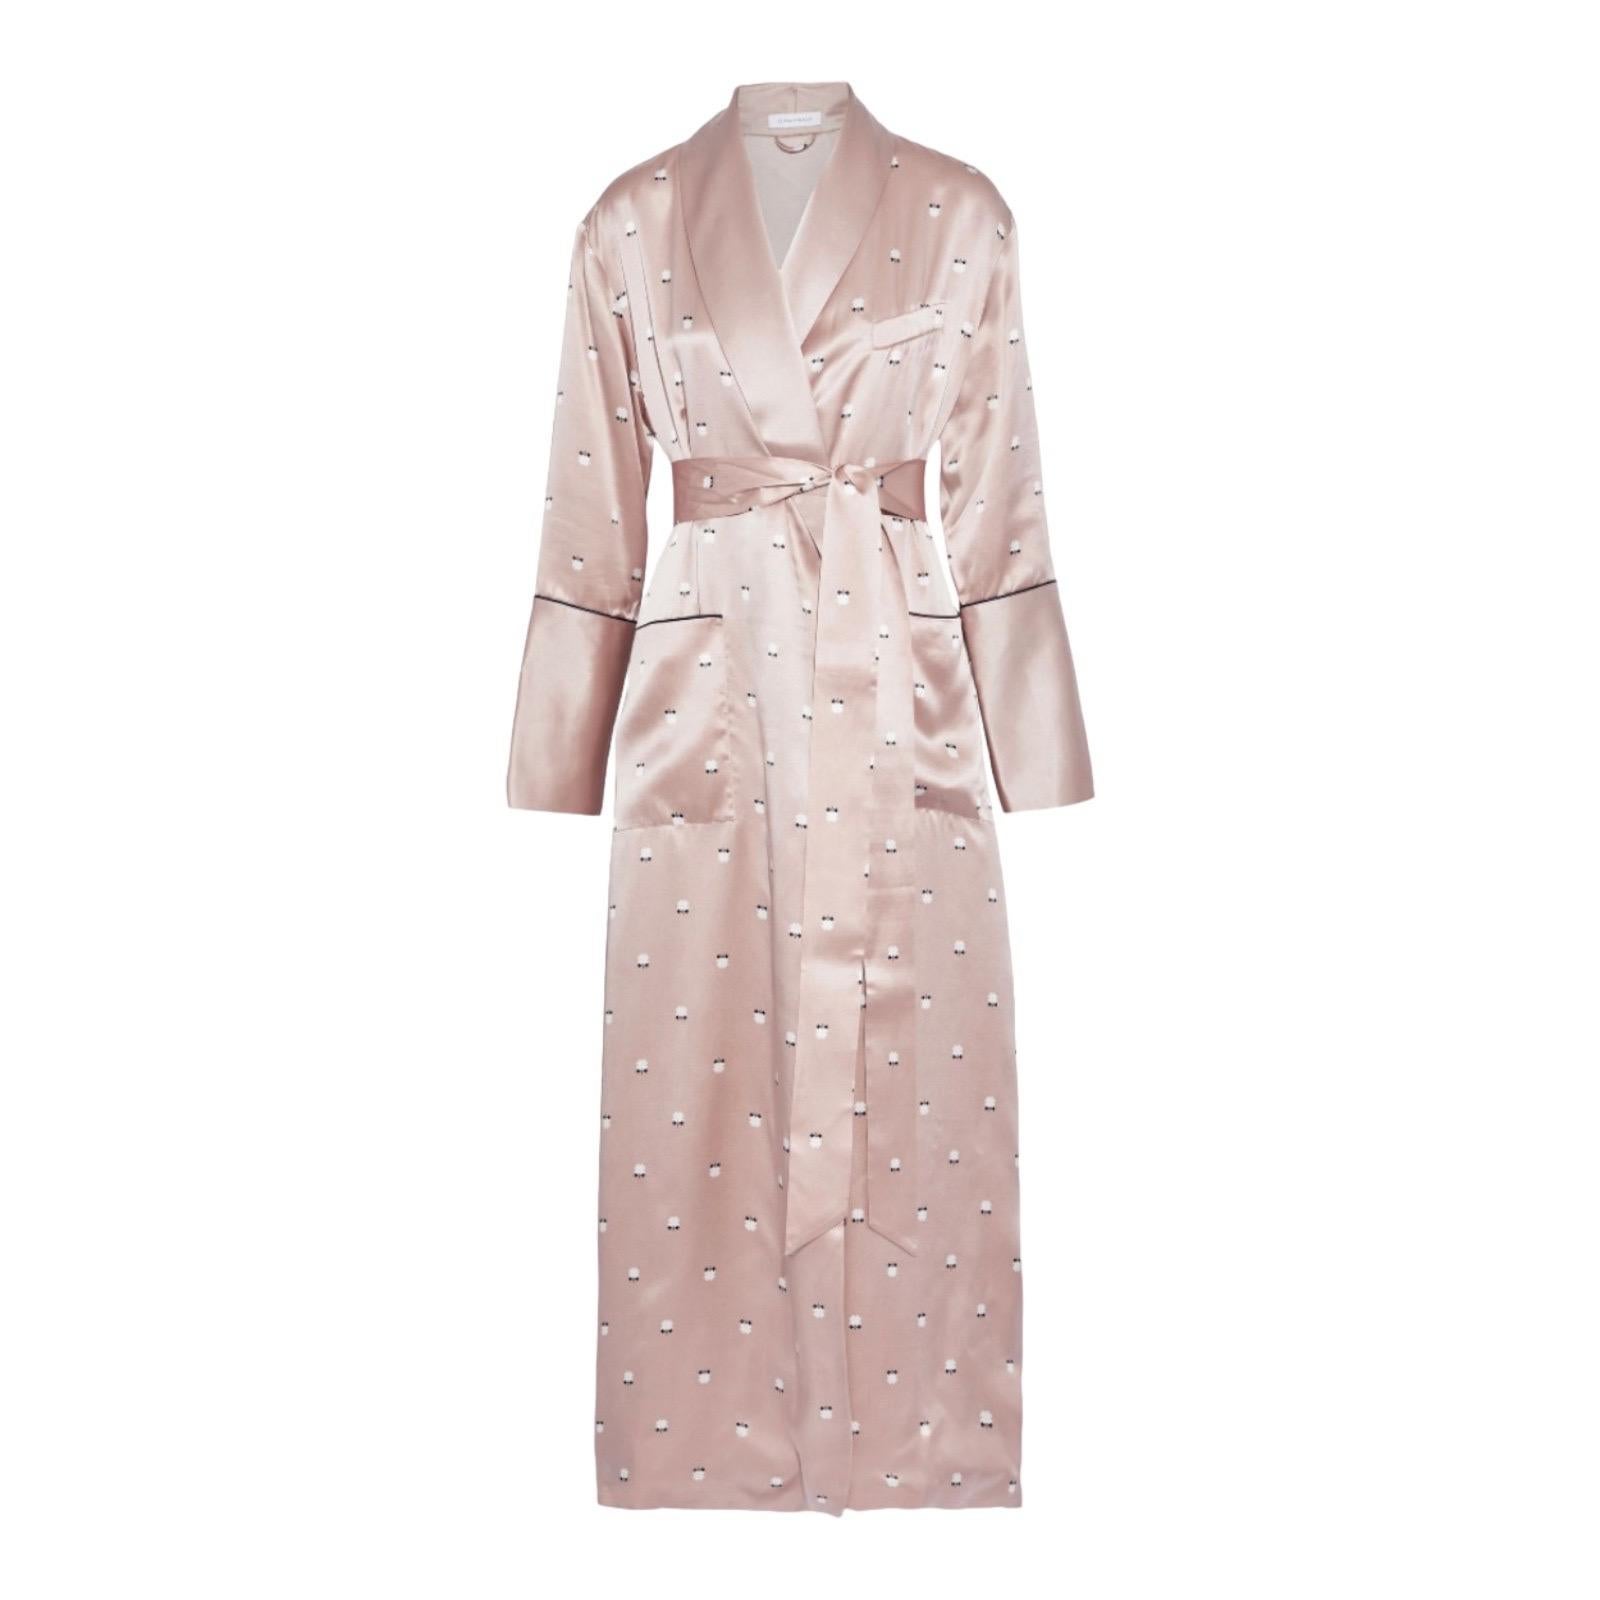 Personalised Children's Kids Pale Pink Girl Hooded Bathrobe / Dressing Gown  £16.99